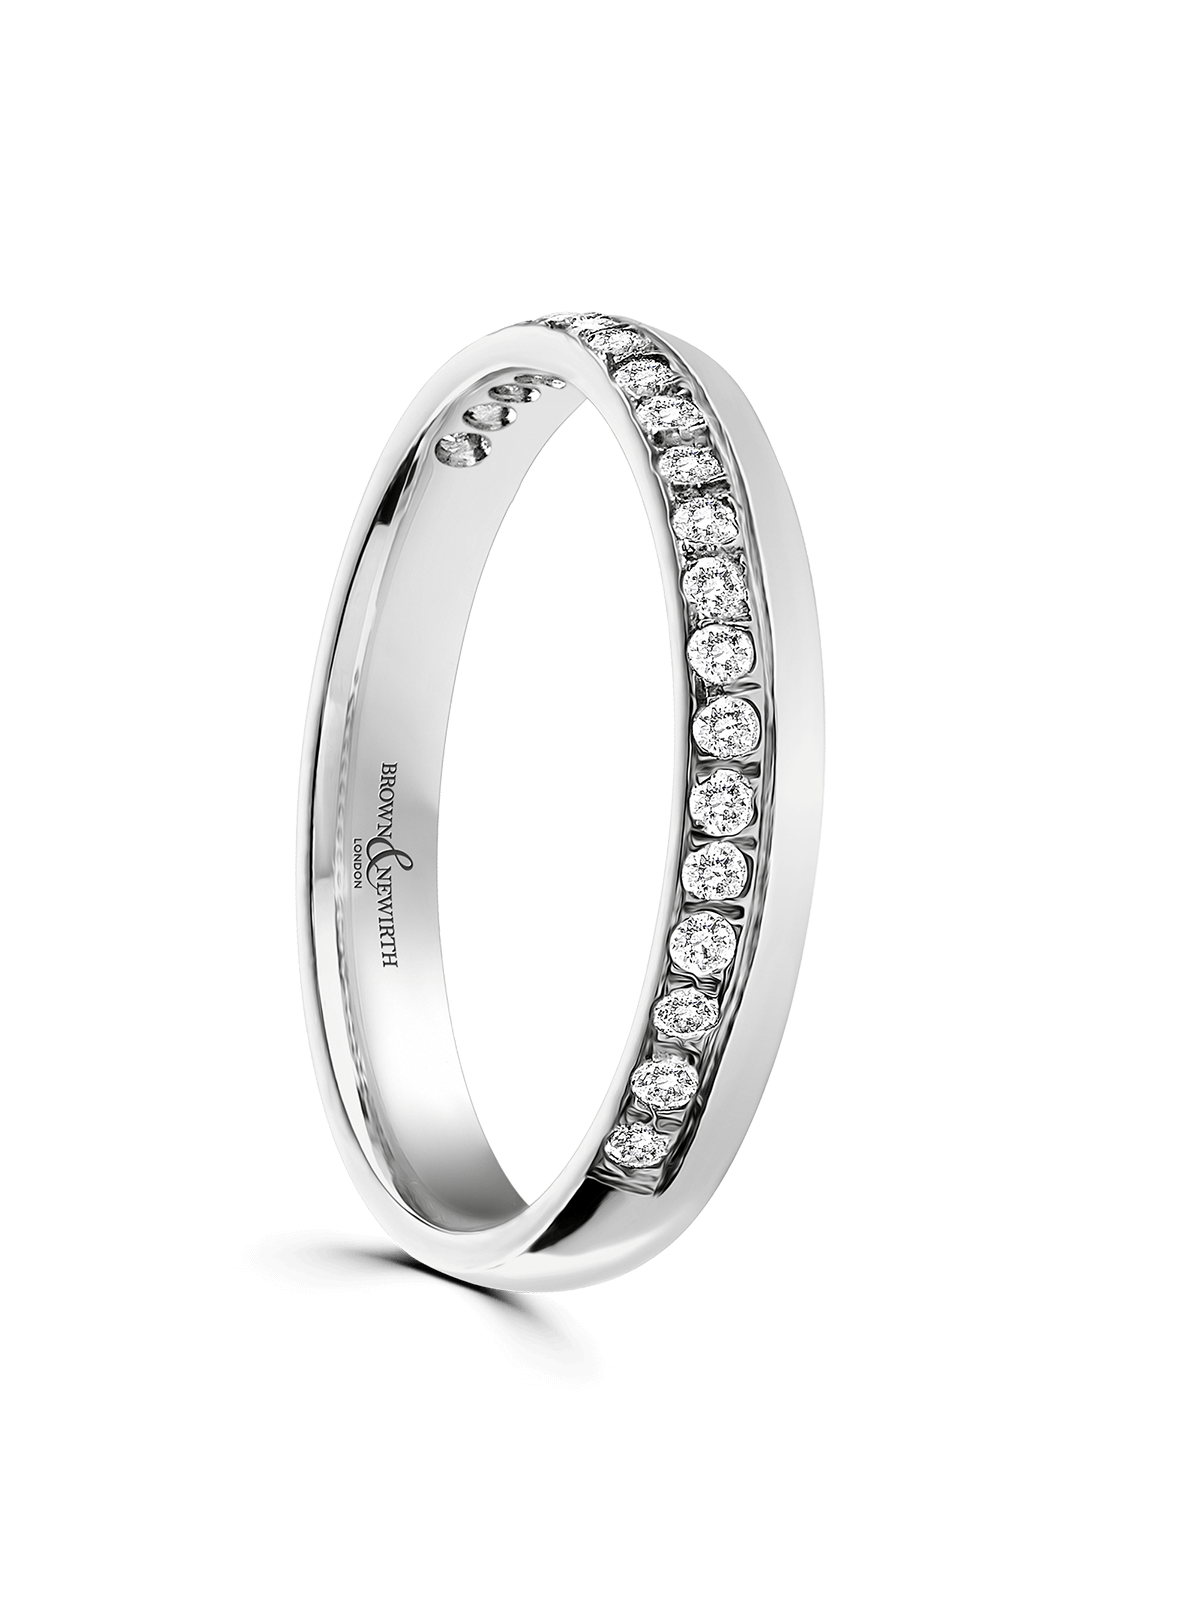 Brown & Newirth Venus 0.22ct Brilliant Cut Diamond Wedding Ring in 18ct White Gold